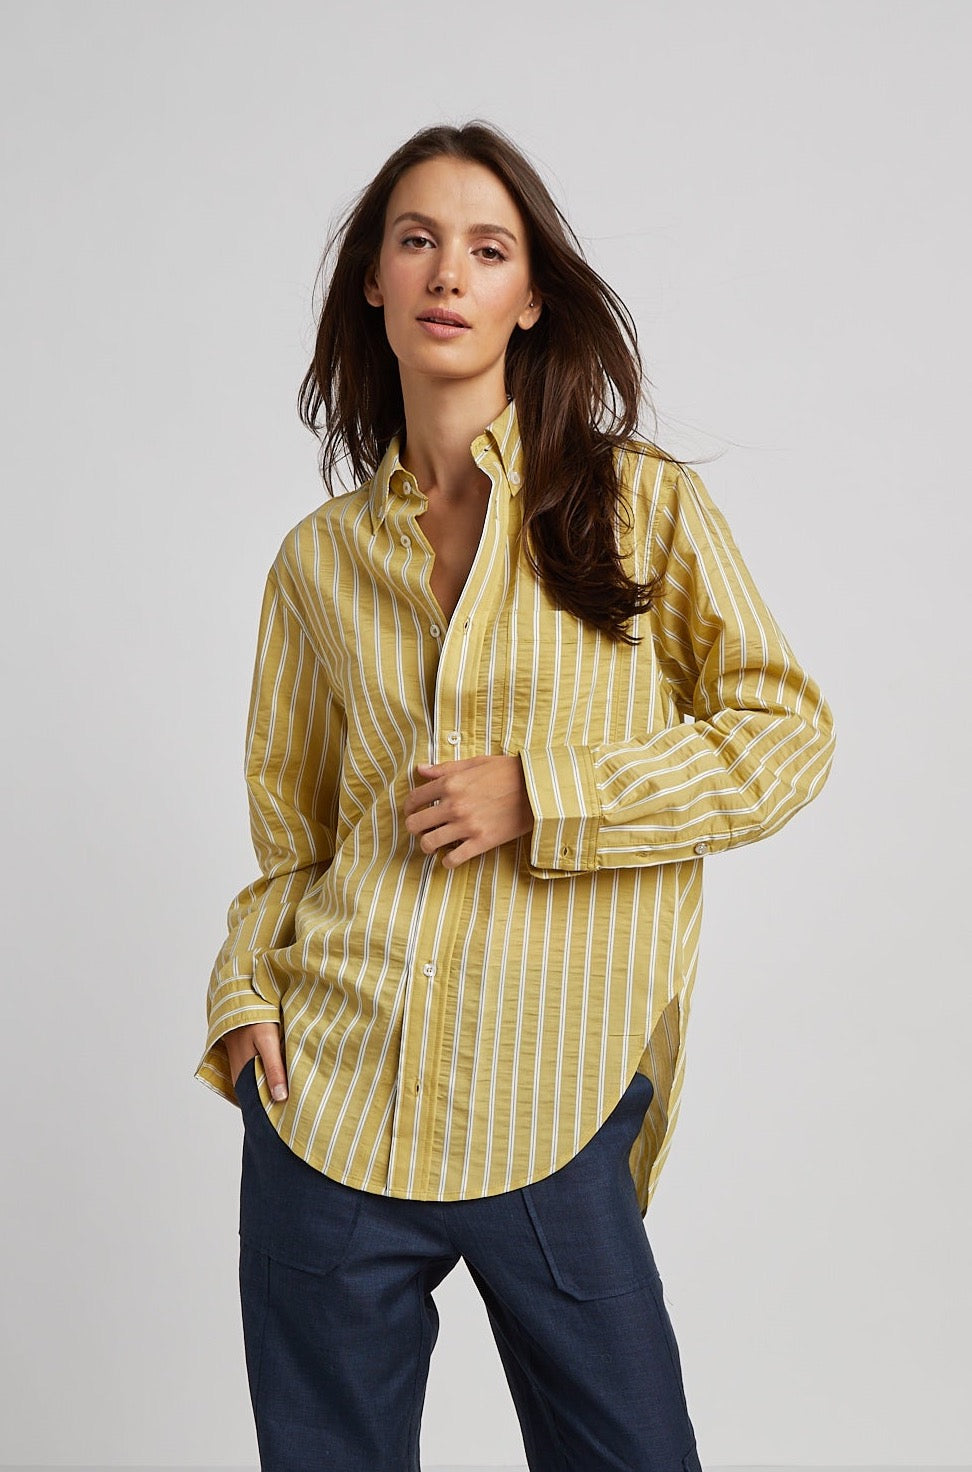 Adroit Atelier Kean Boyfriend Striped Button Down Shirt - Chartreuse